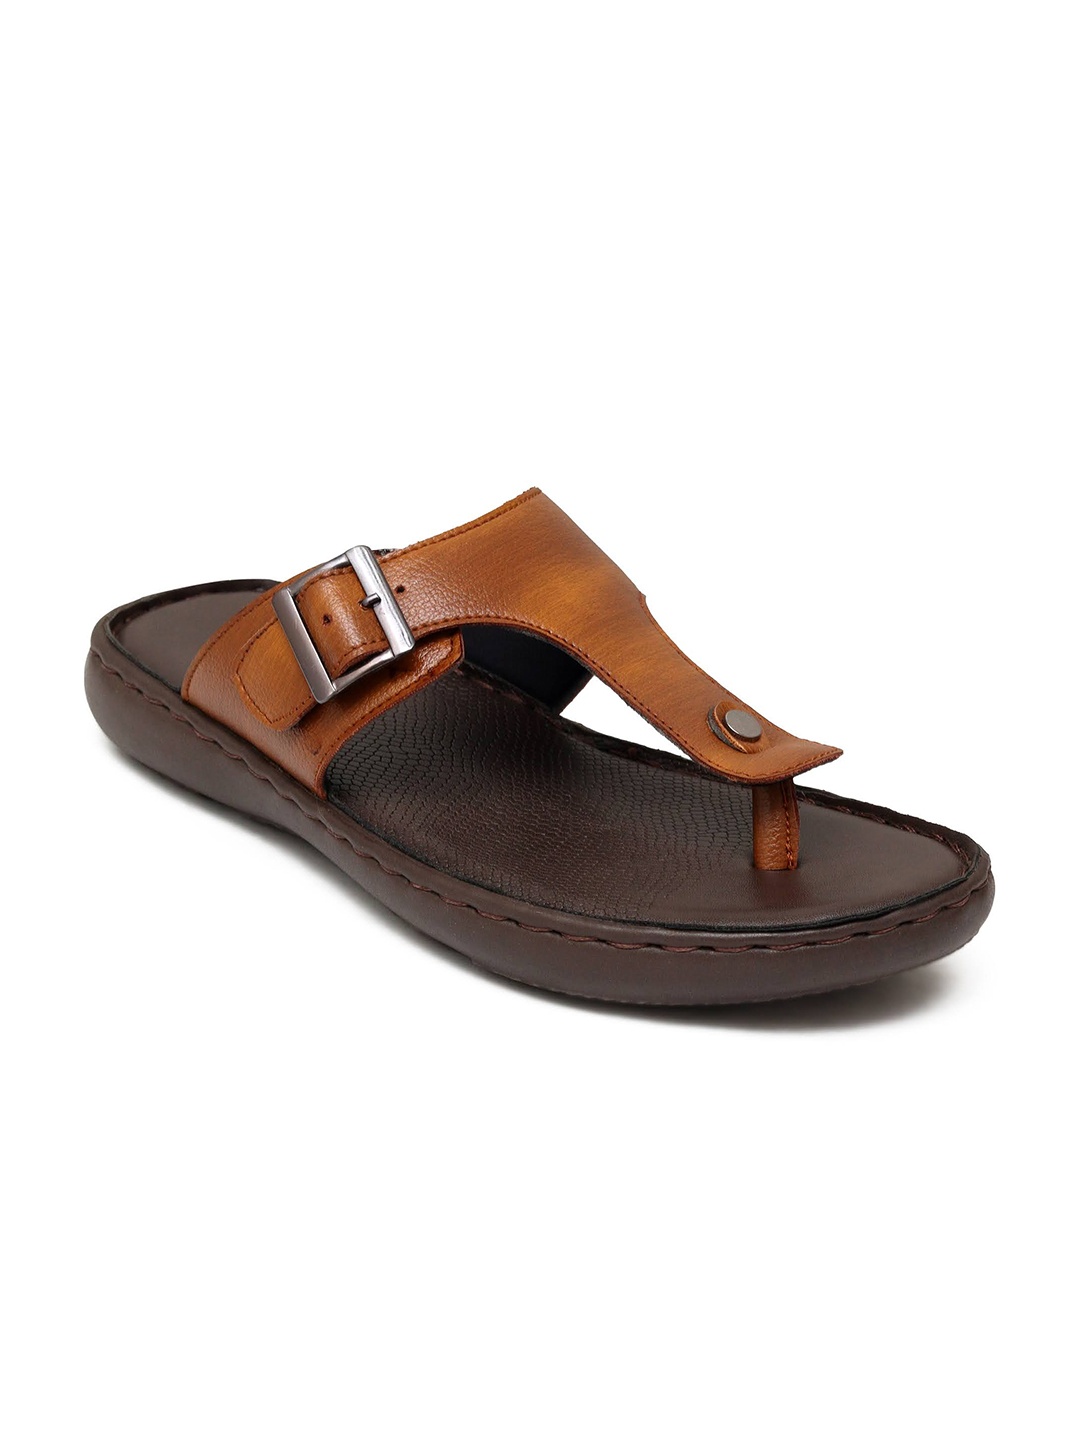 

Ferraiolo Men Tan & Brown Comfort Sandals